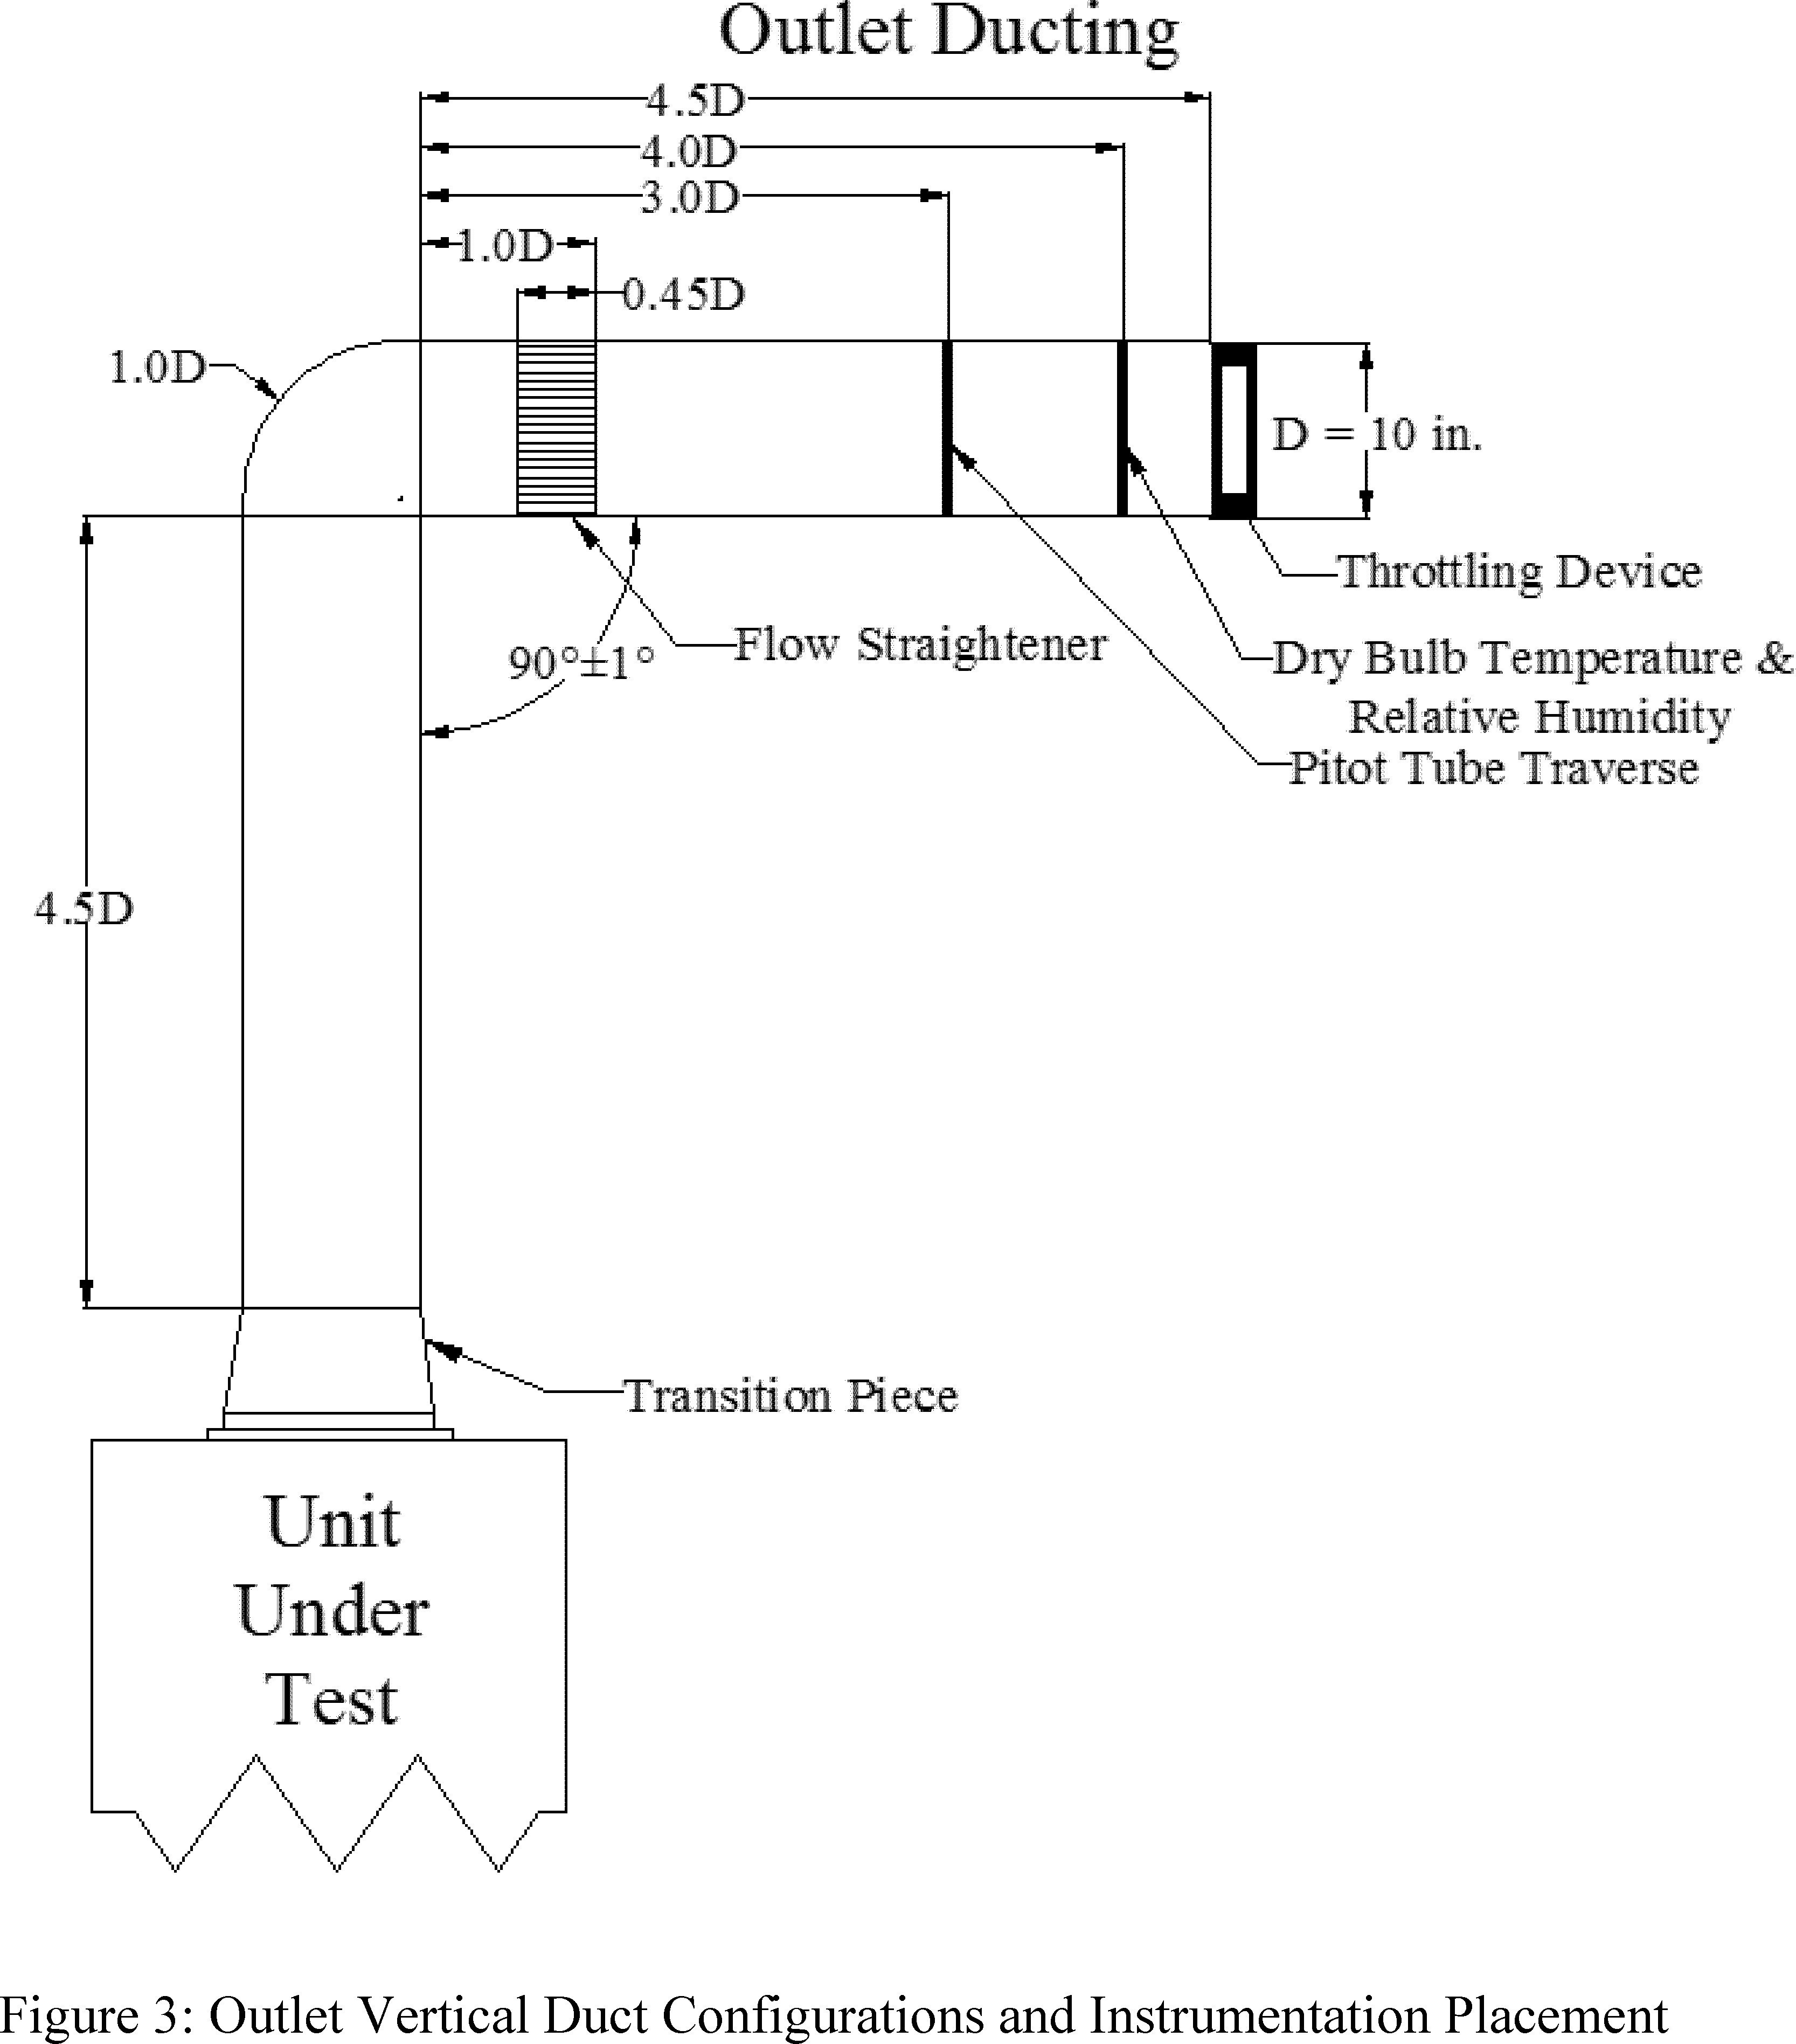 Rv Plug Wiring Diagram Duo therm Rv Air Conditioner Wiring Diagram Best atwood Of Rv Plug Wiring Diagram